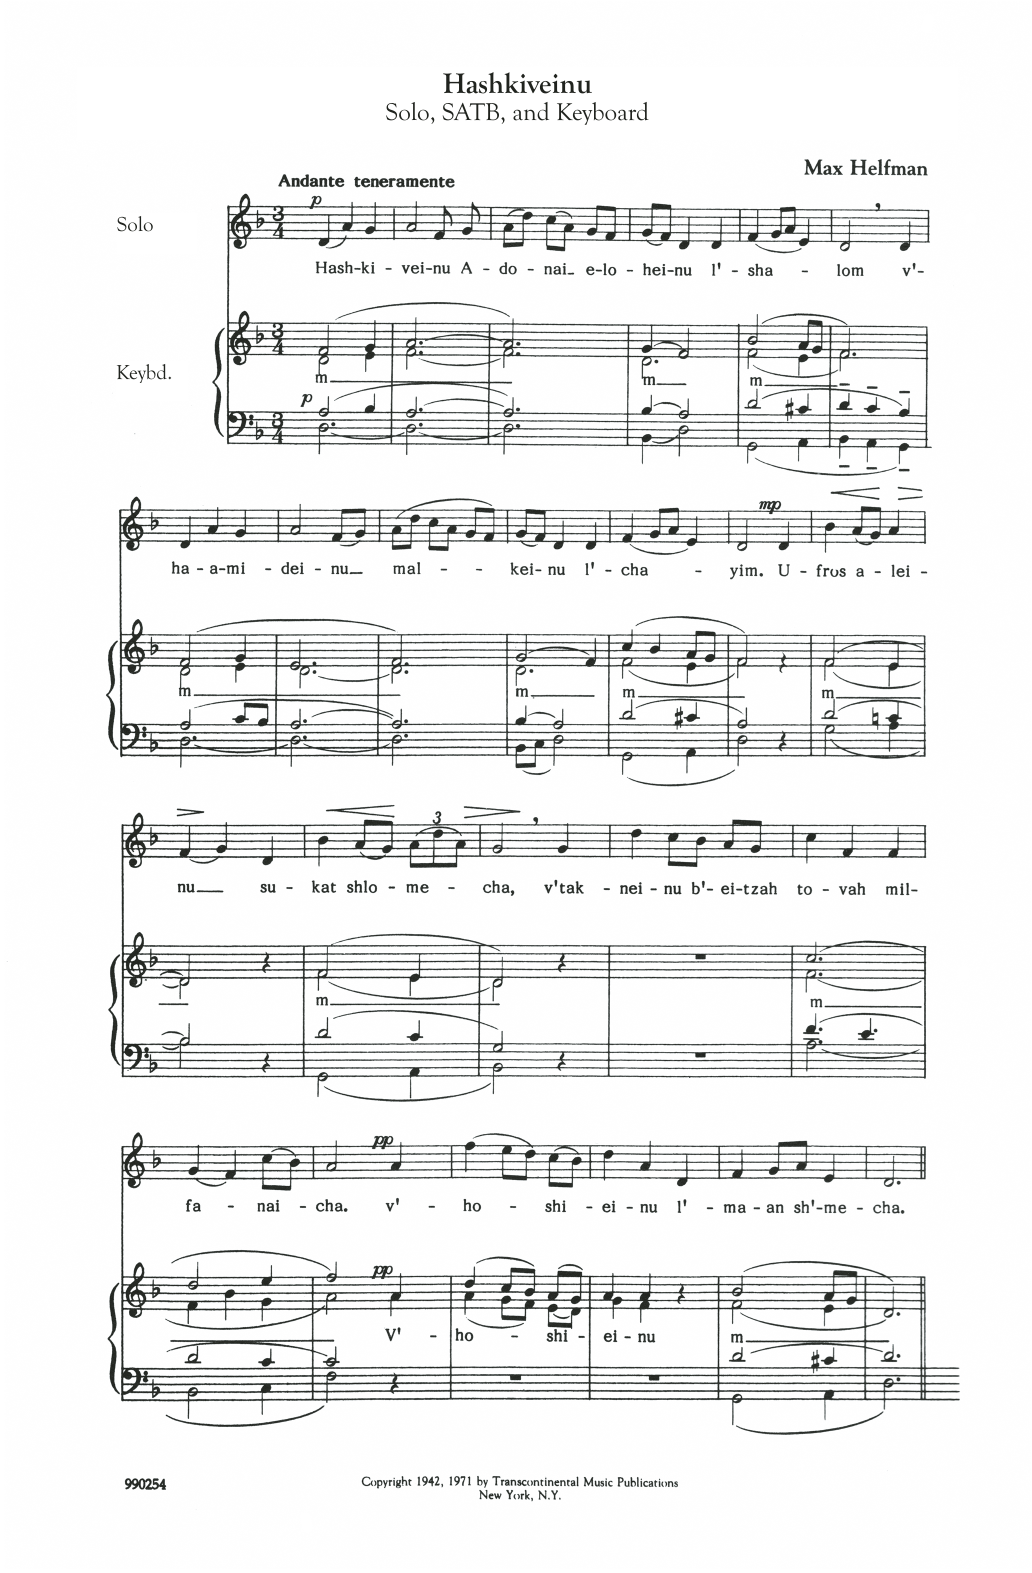 Max Helfman Hashkiveinu Sheet Music Notes & Chords for SATB Choir - Download or Print PDF